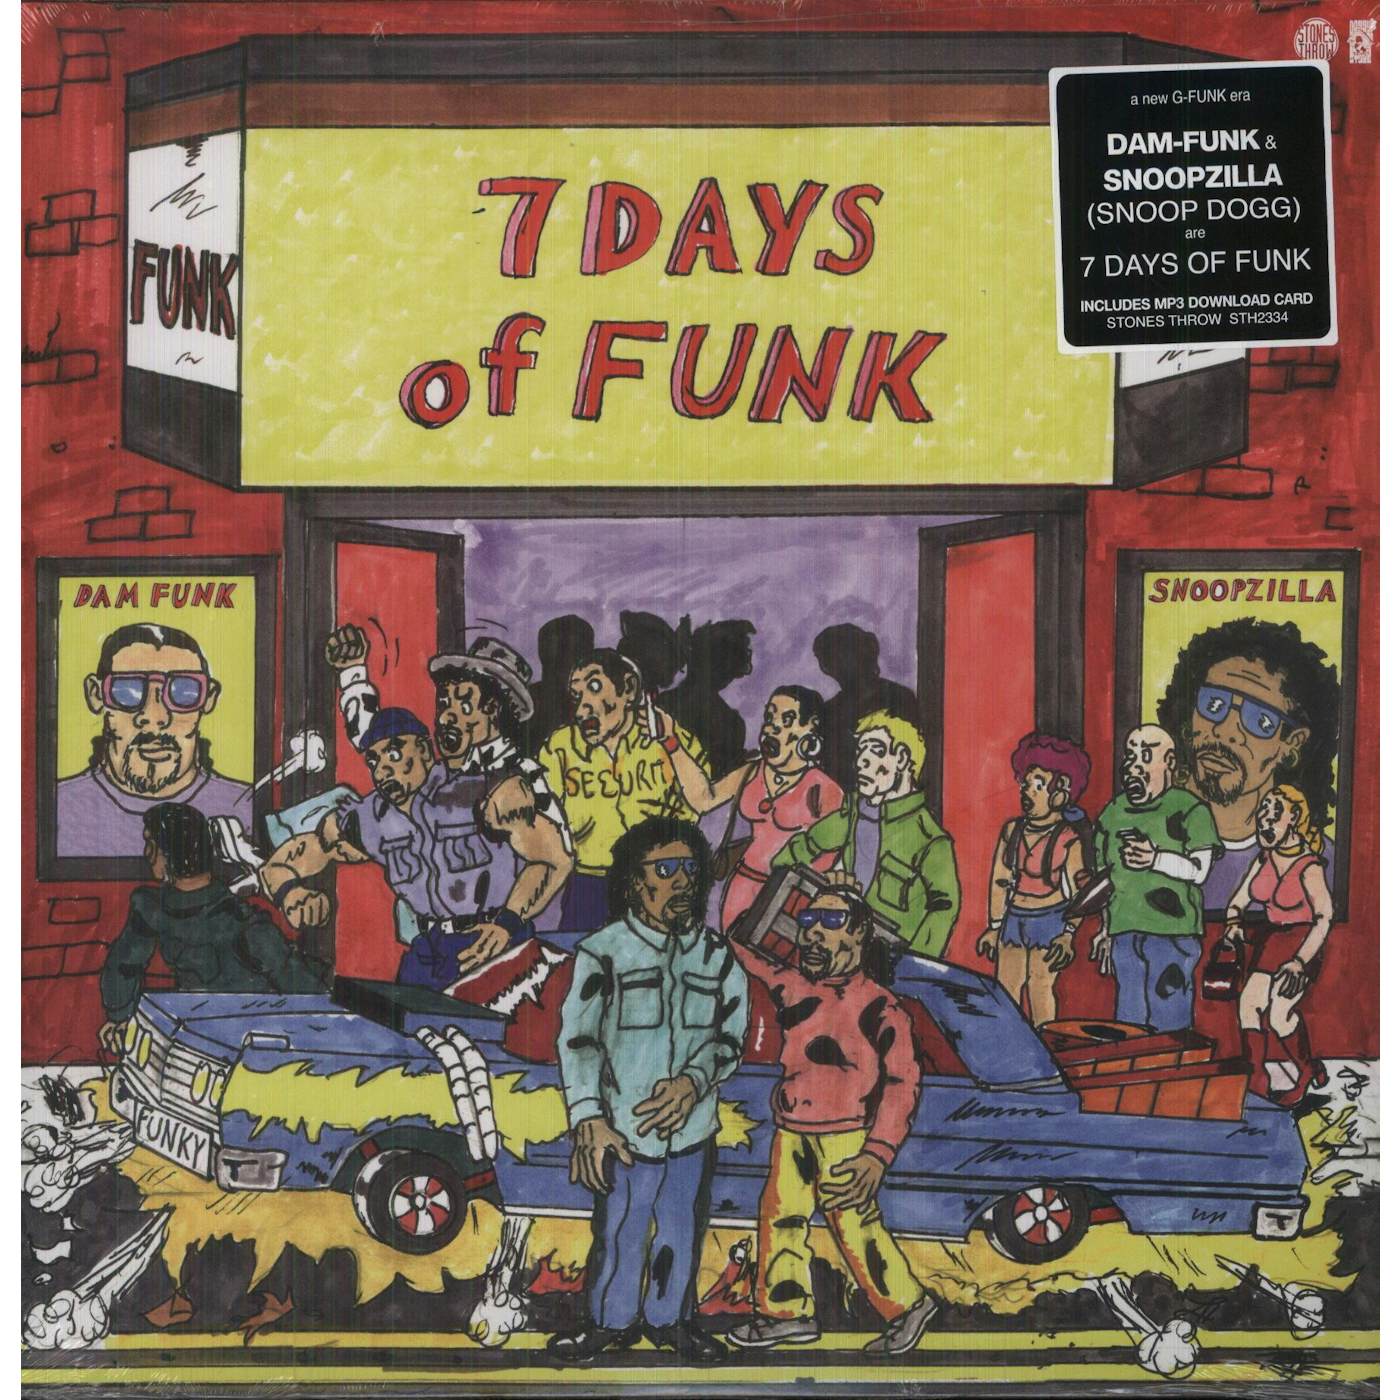 7 Days Of Funk Vinyl Record